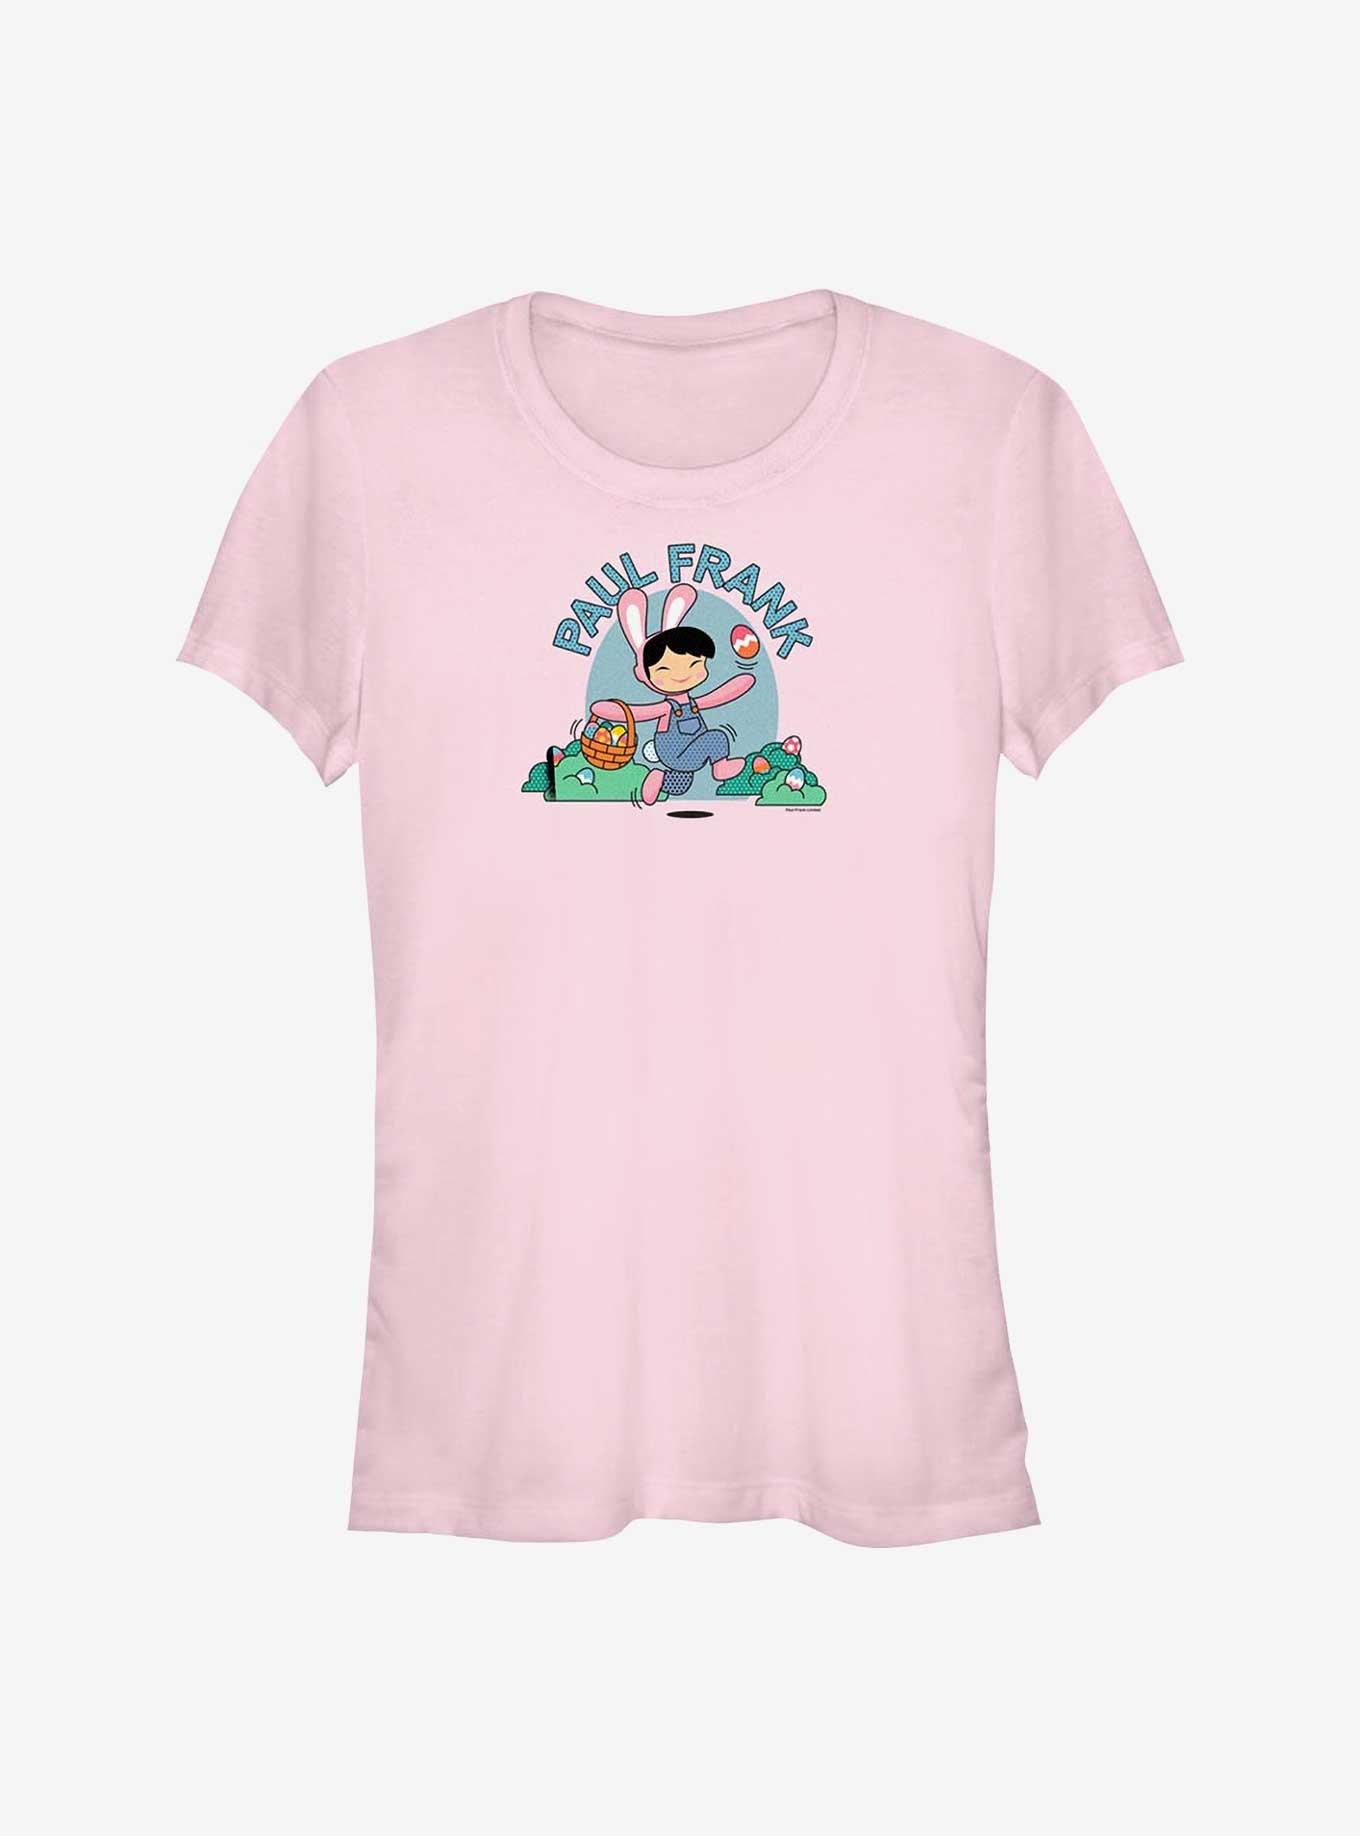 Paul Frank Easter Bunny Girls T-Shirt